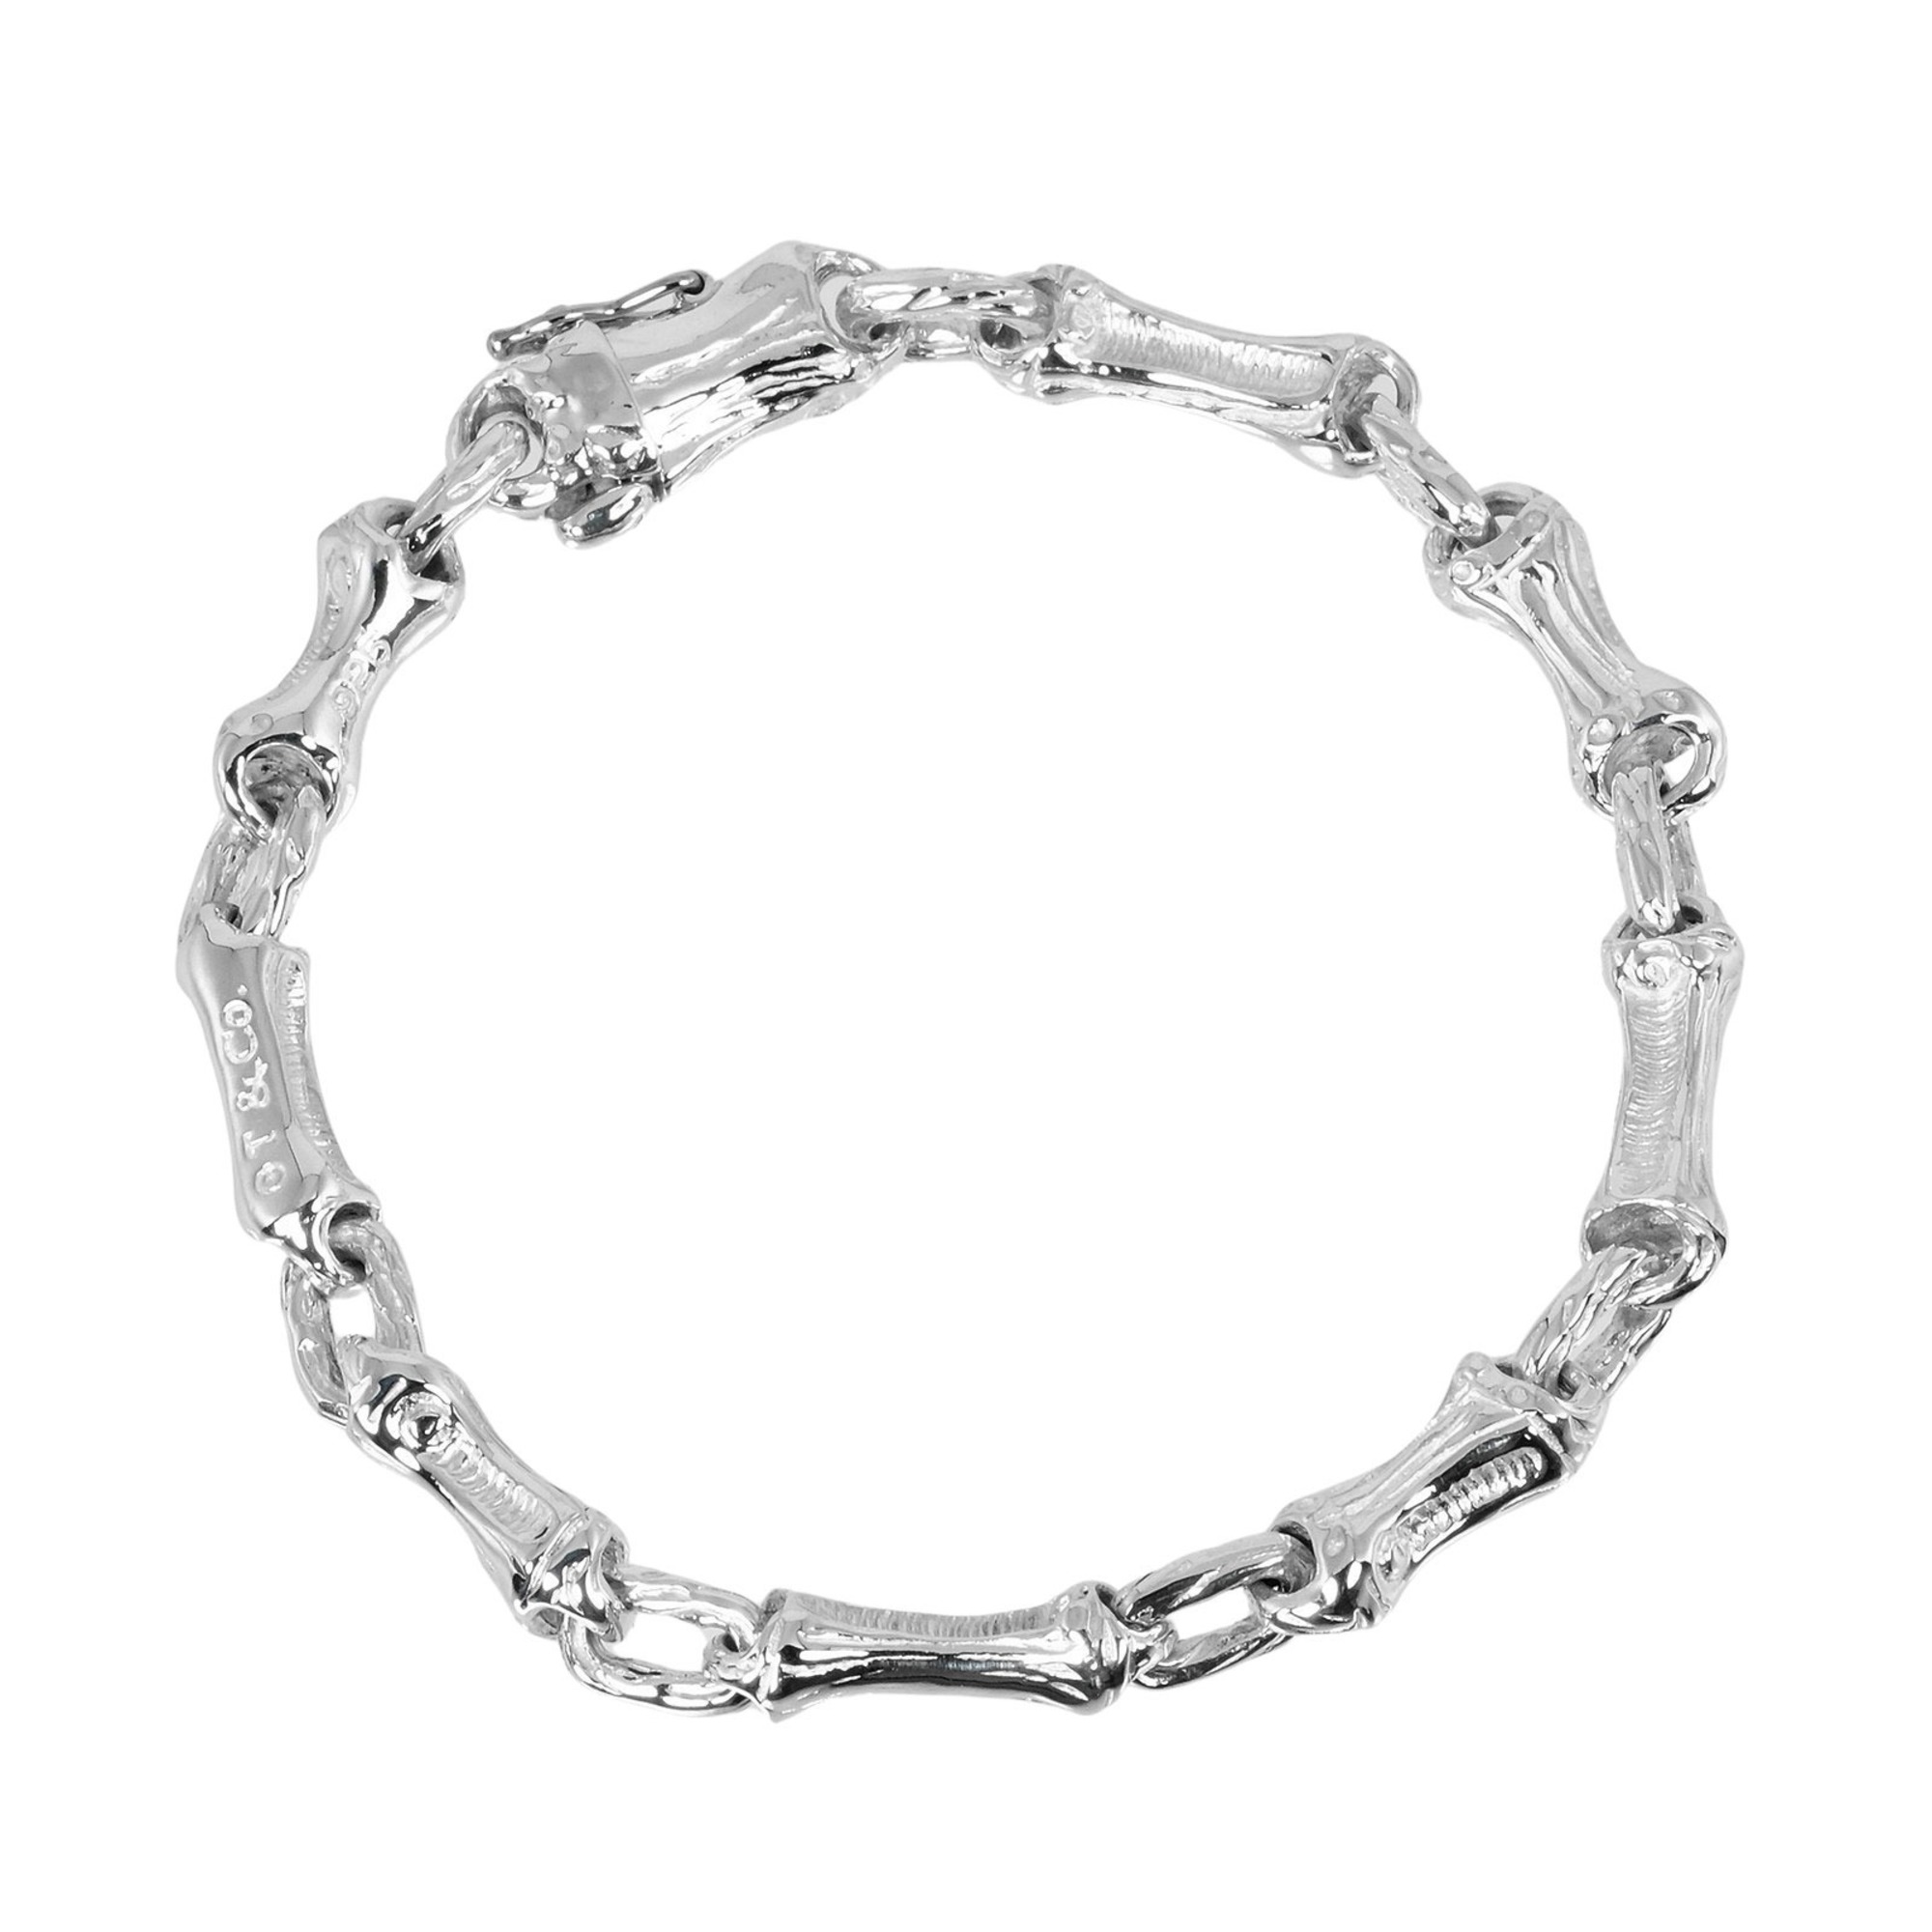 Tiffany & Co. Bamboo Chain Bracelet, 17cm wrist size, 925 silver, approx. 24.1g